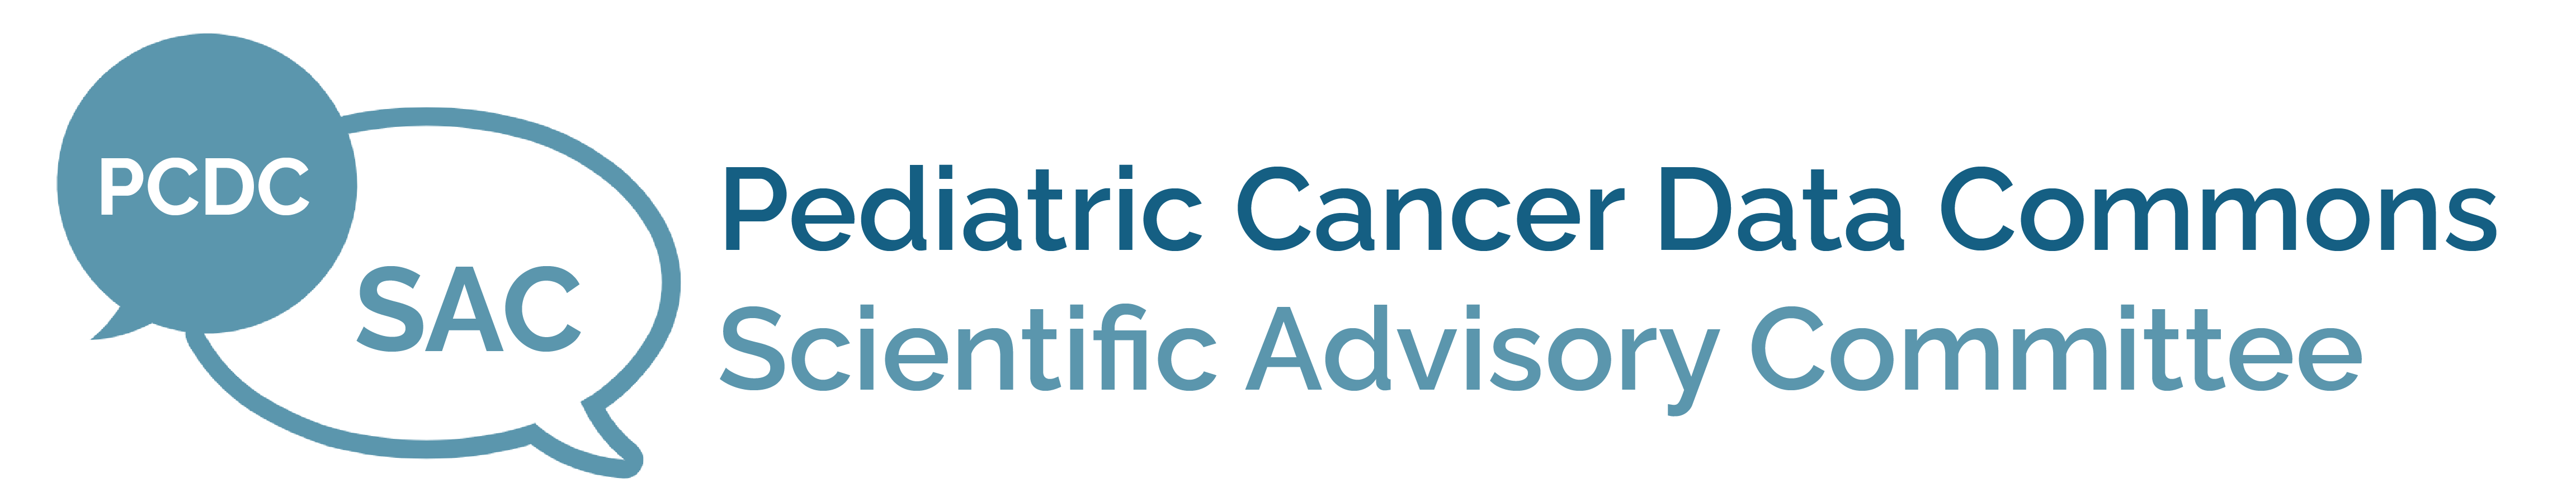 PCDC Scientific Advisory Committee